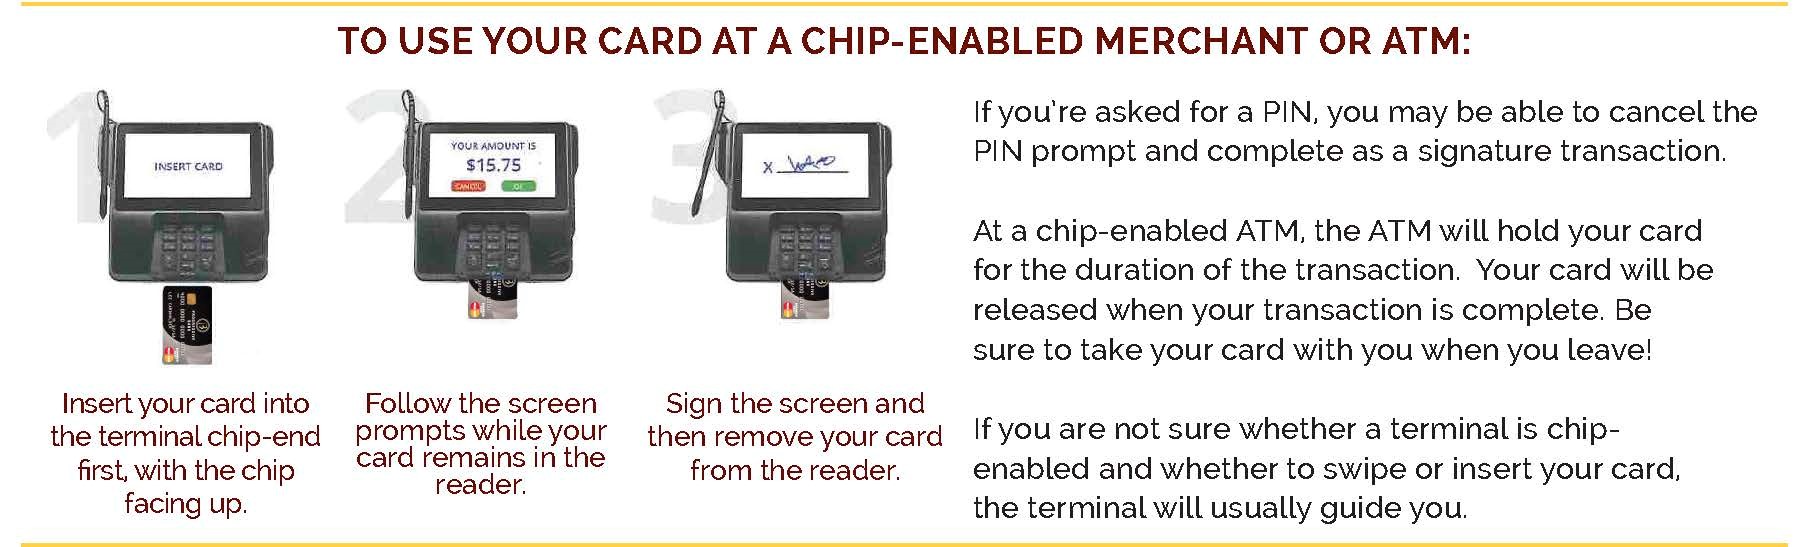 EMV Chip Card Transaction